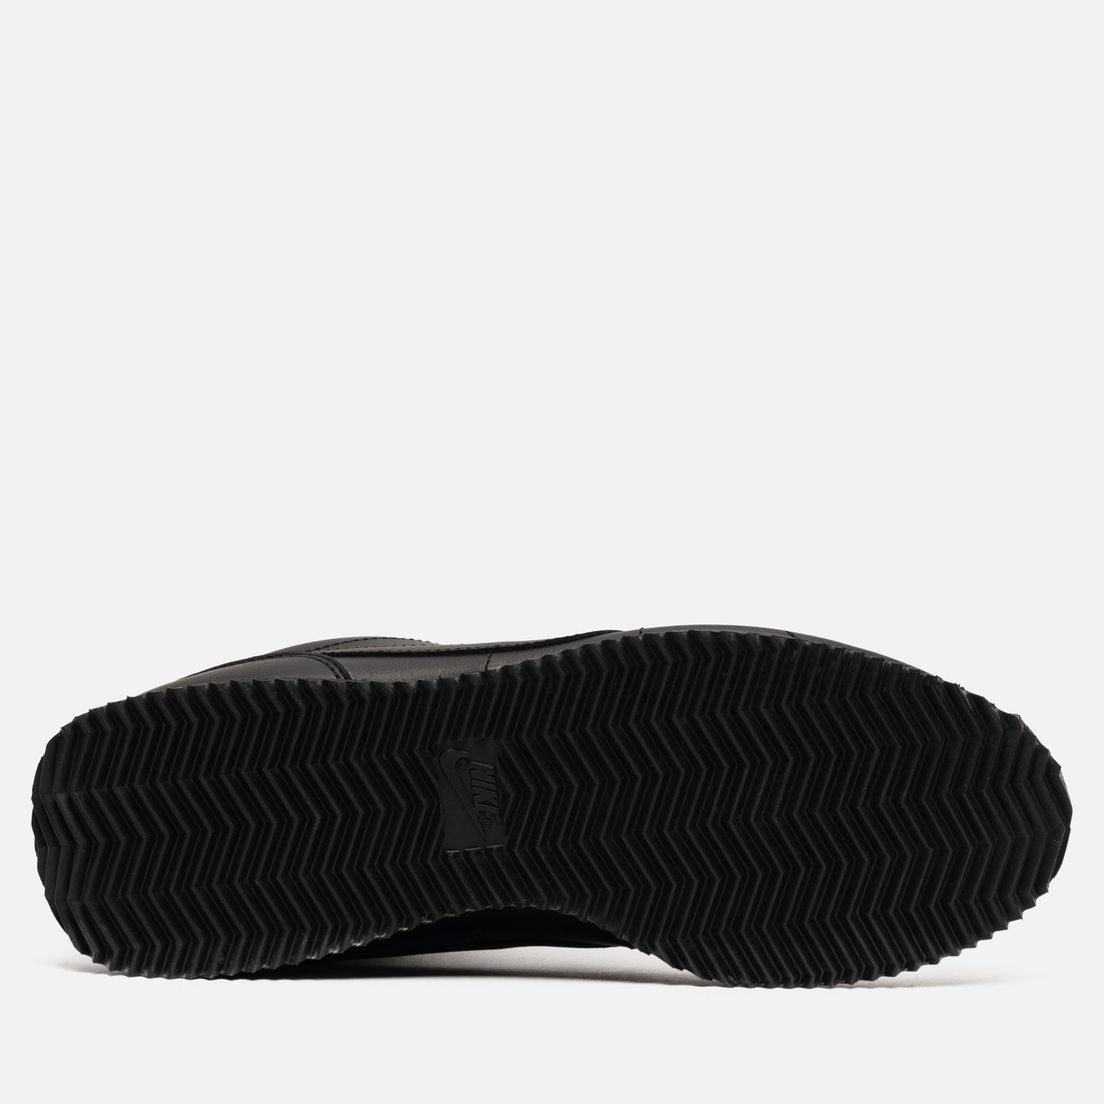 Nike Мужские кроссовки Cortez Basic Leather